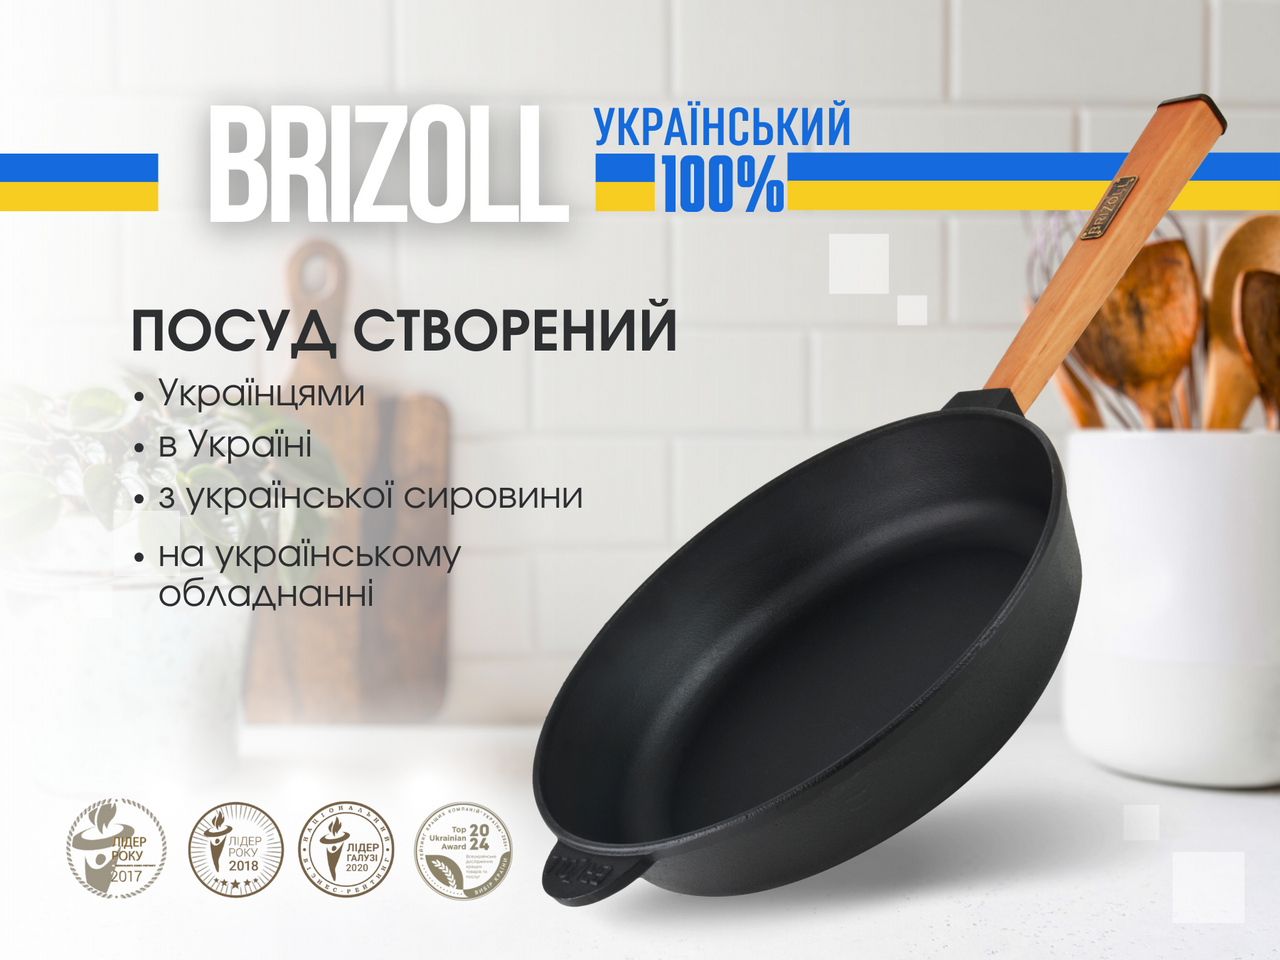 Cast iron pan with a handle Optima 260 х 60 mm